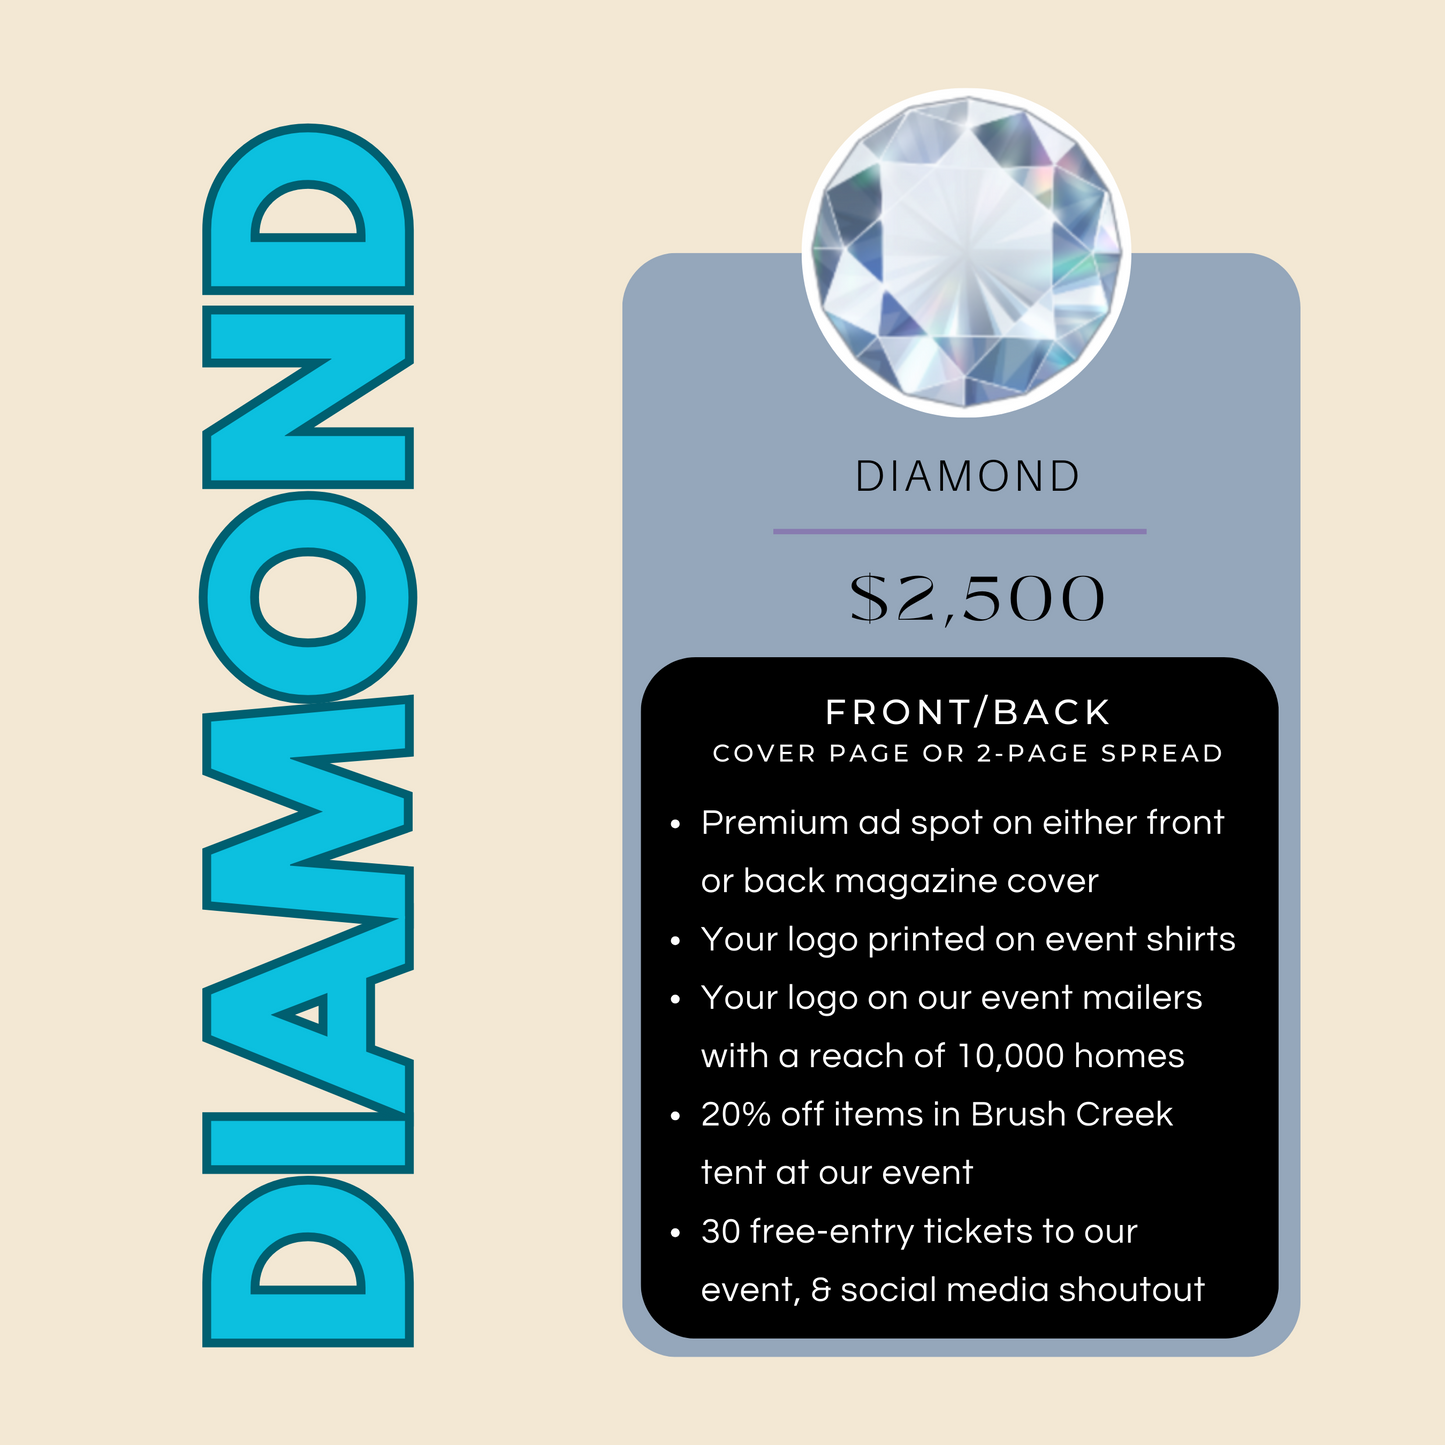 Magazine Sponsorship - DIAMOND ($2,500)